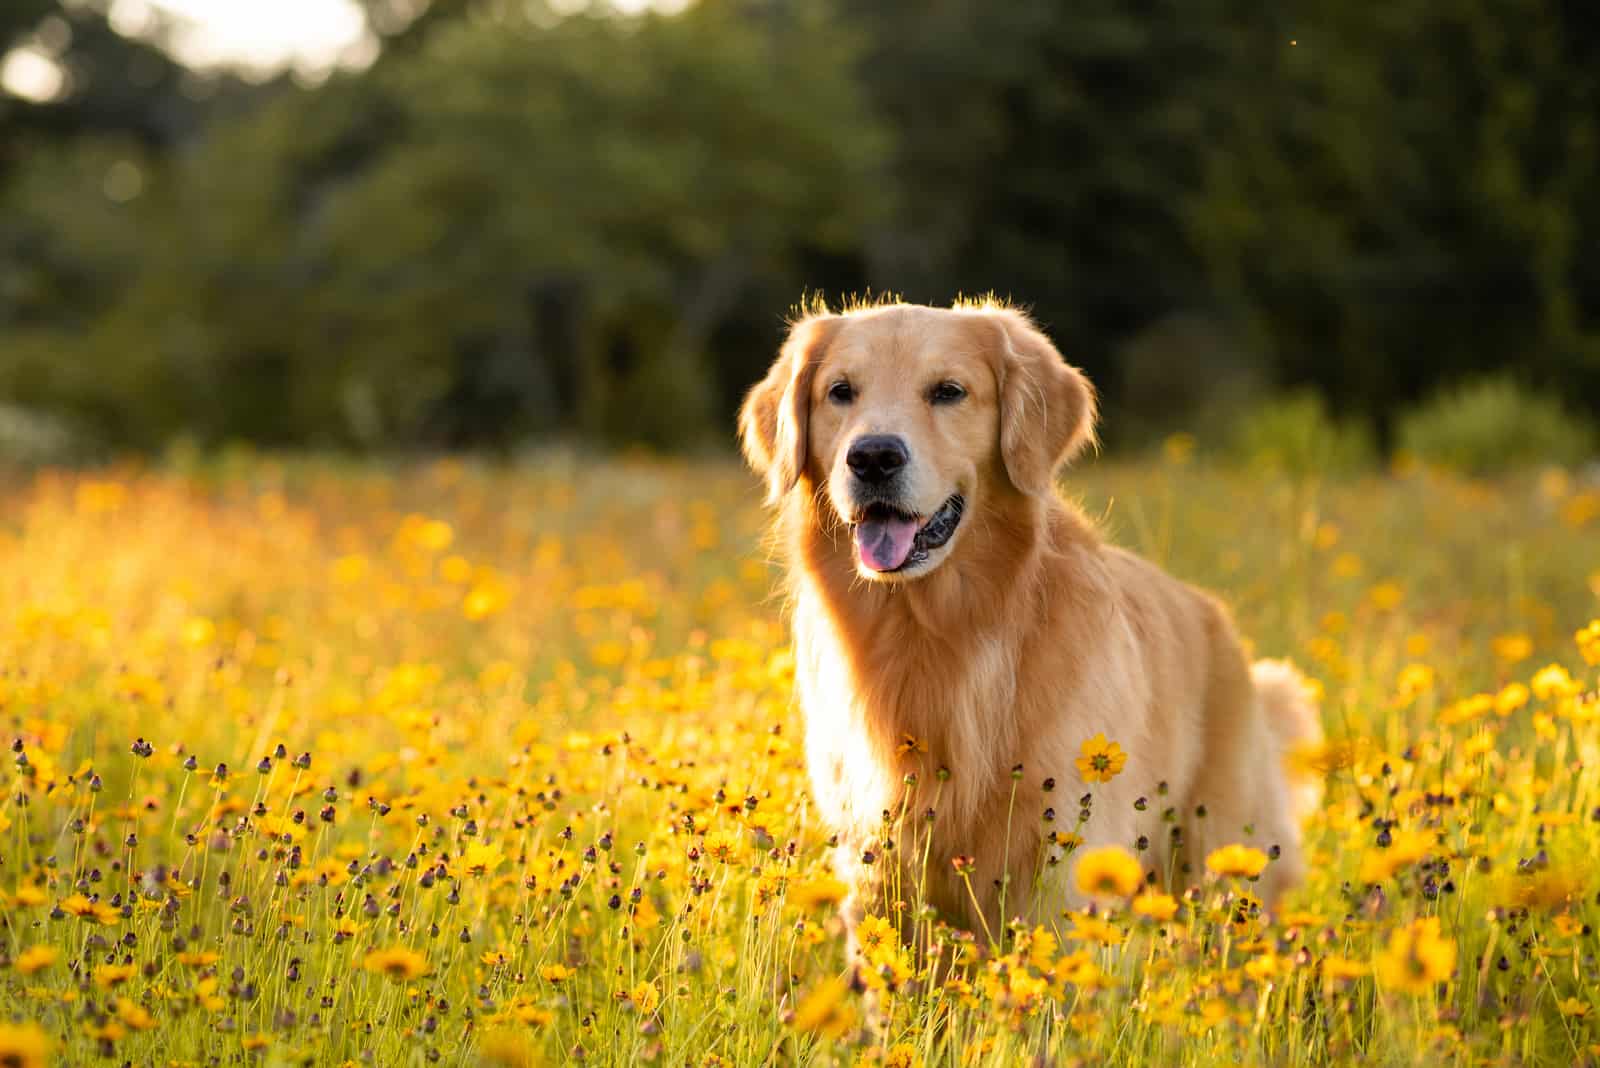 cute golden retriever in the field